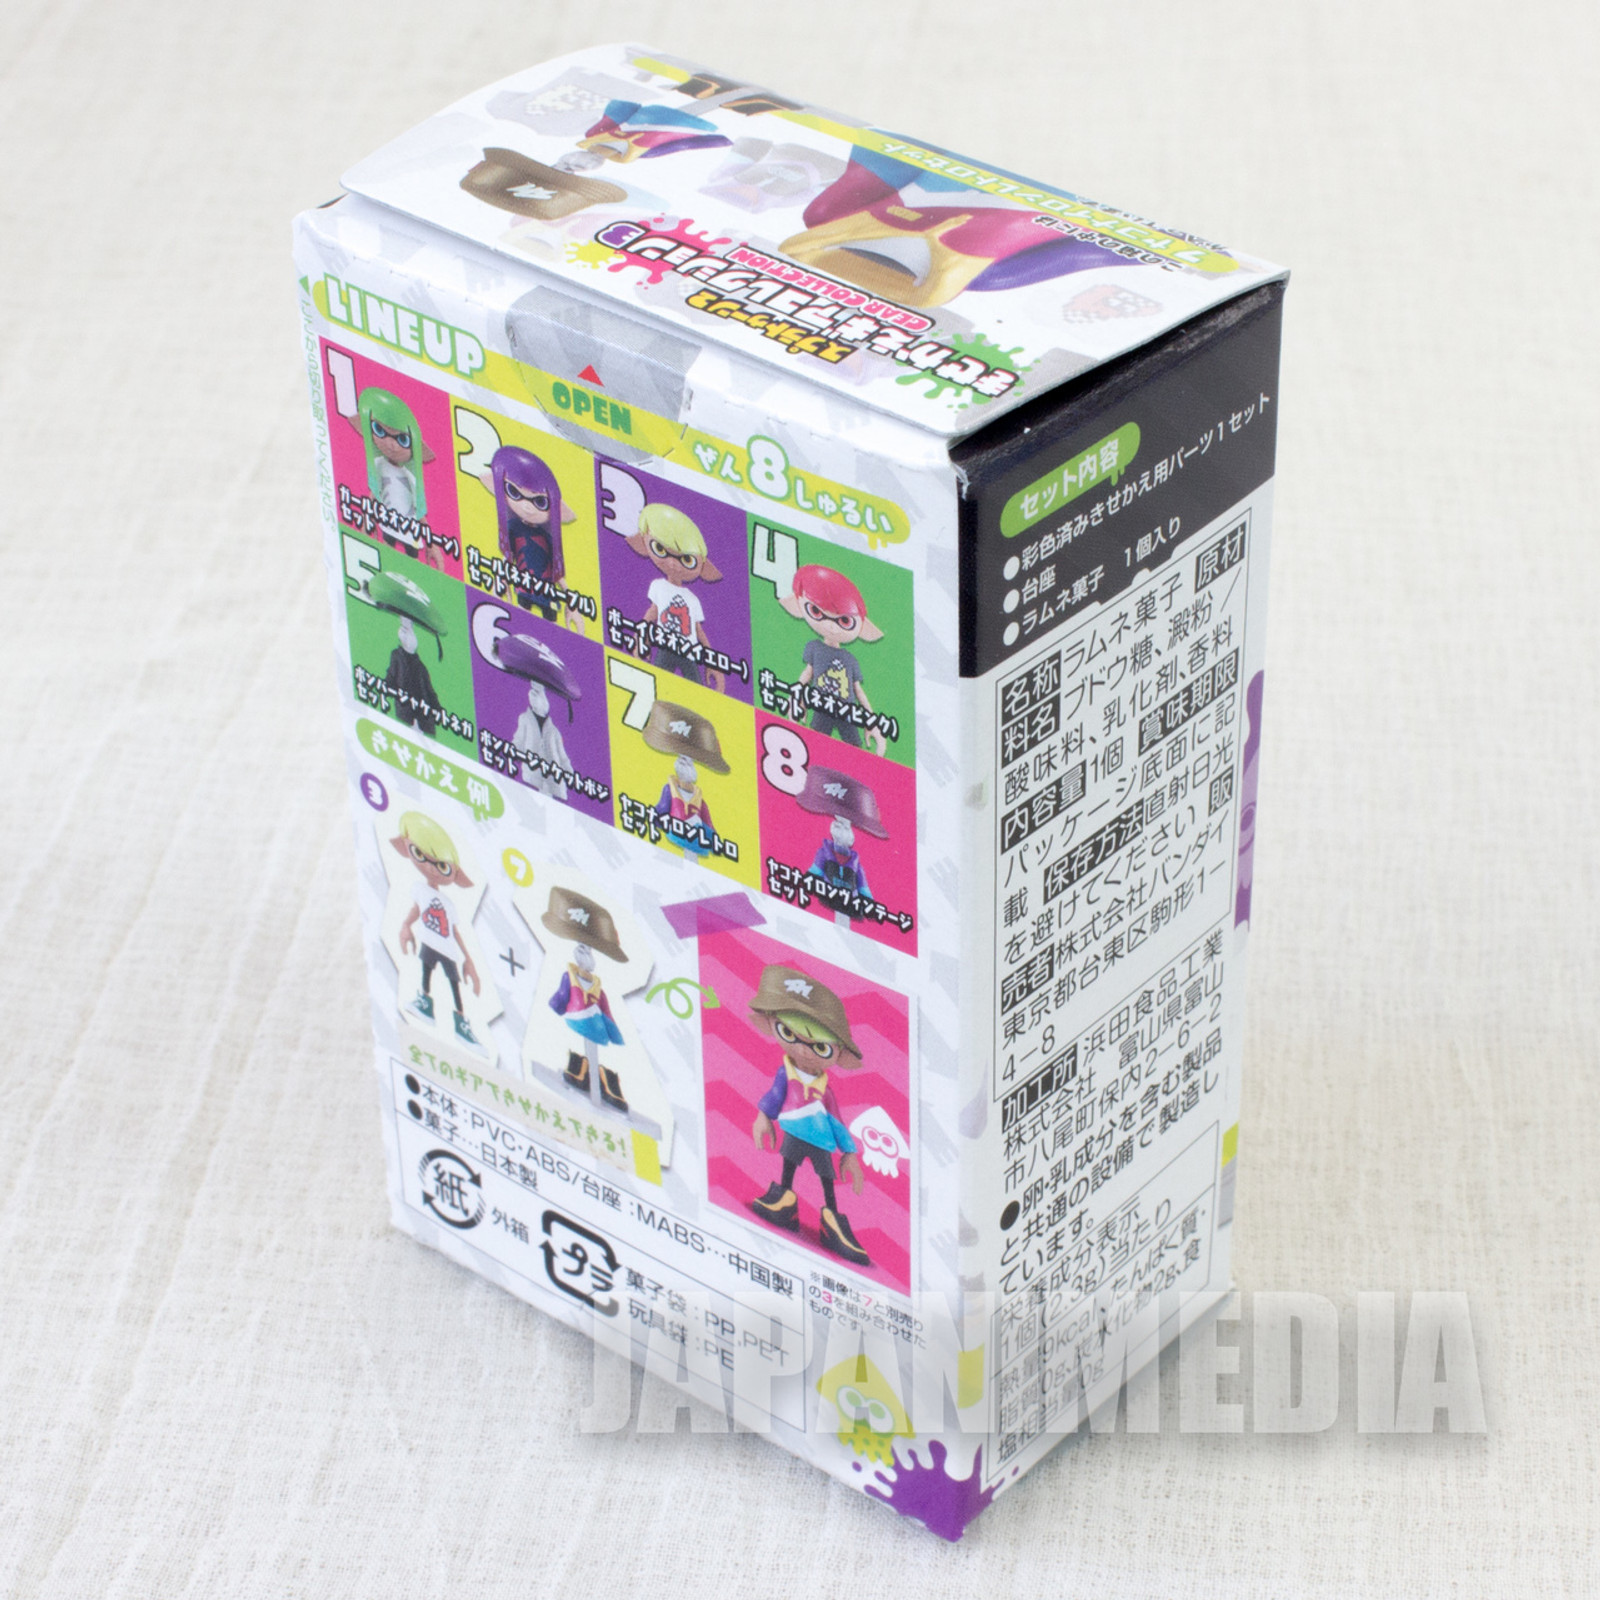 Splatoon 2 Dress-up Figure Gear Collection 3 GEAR Set [7] JAPAN Nintendo Switch